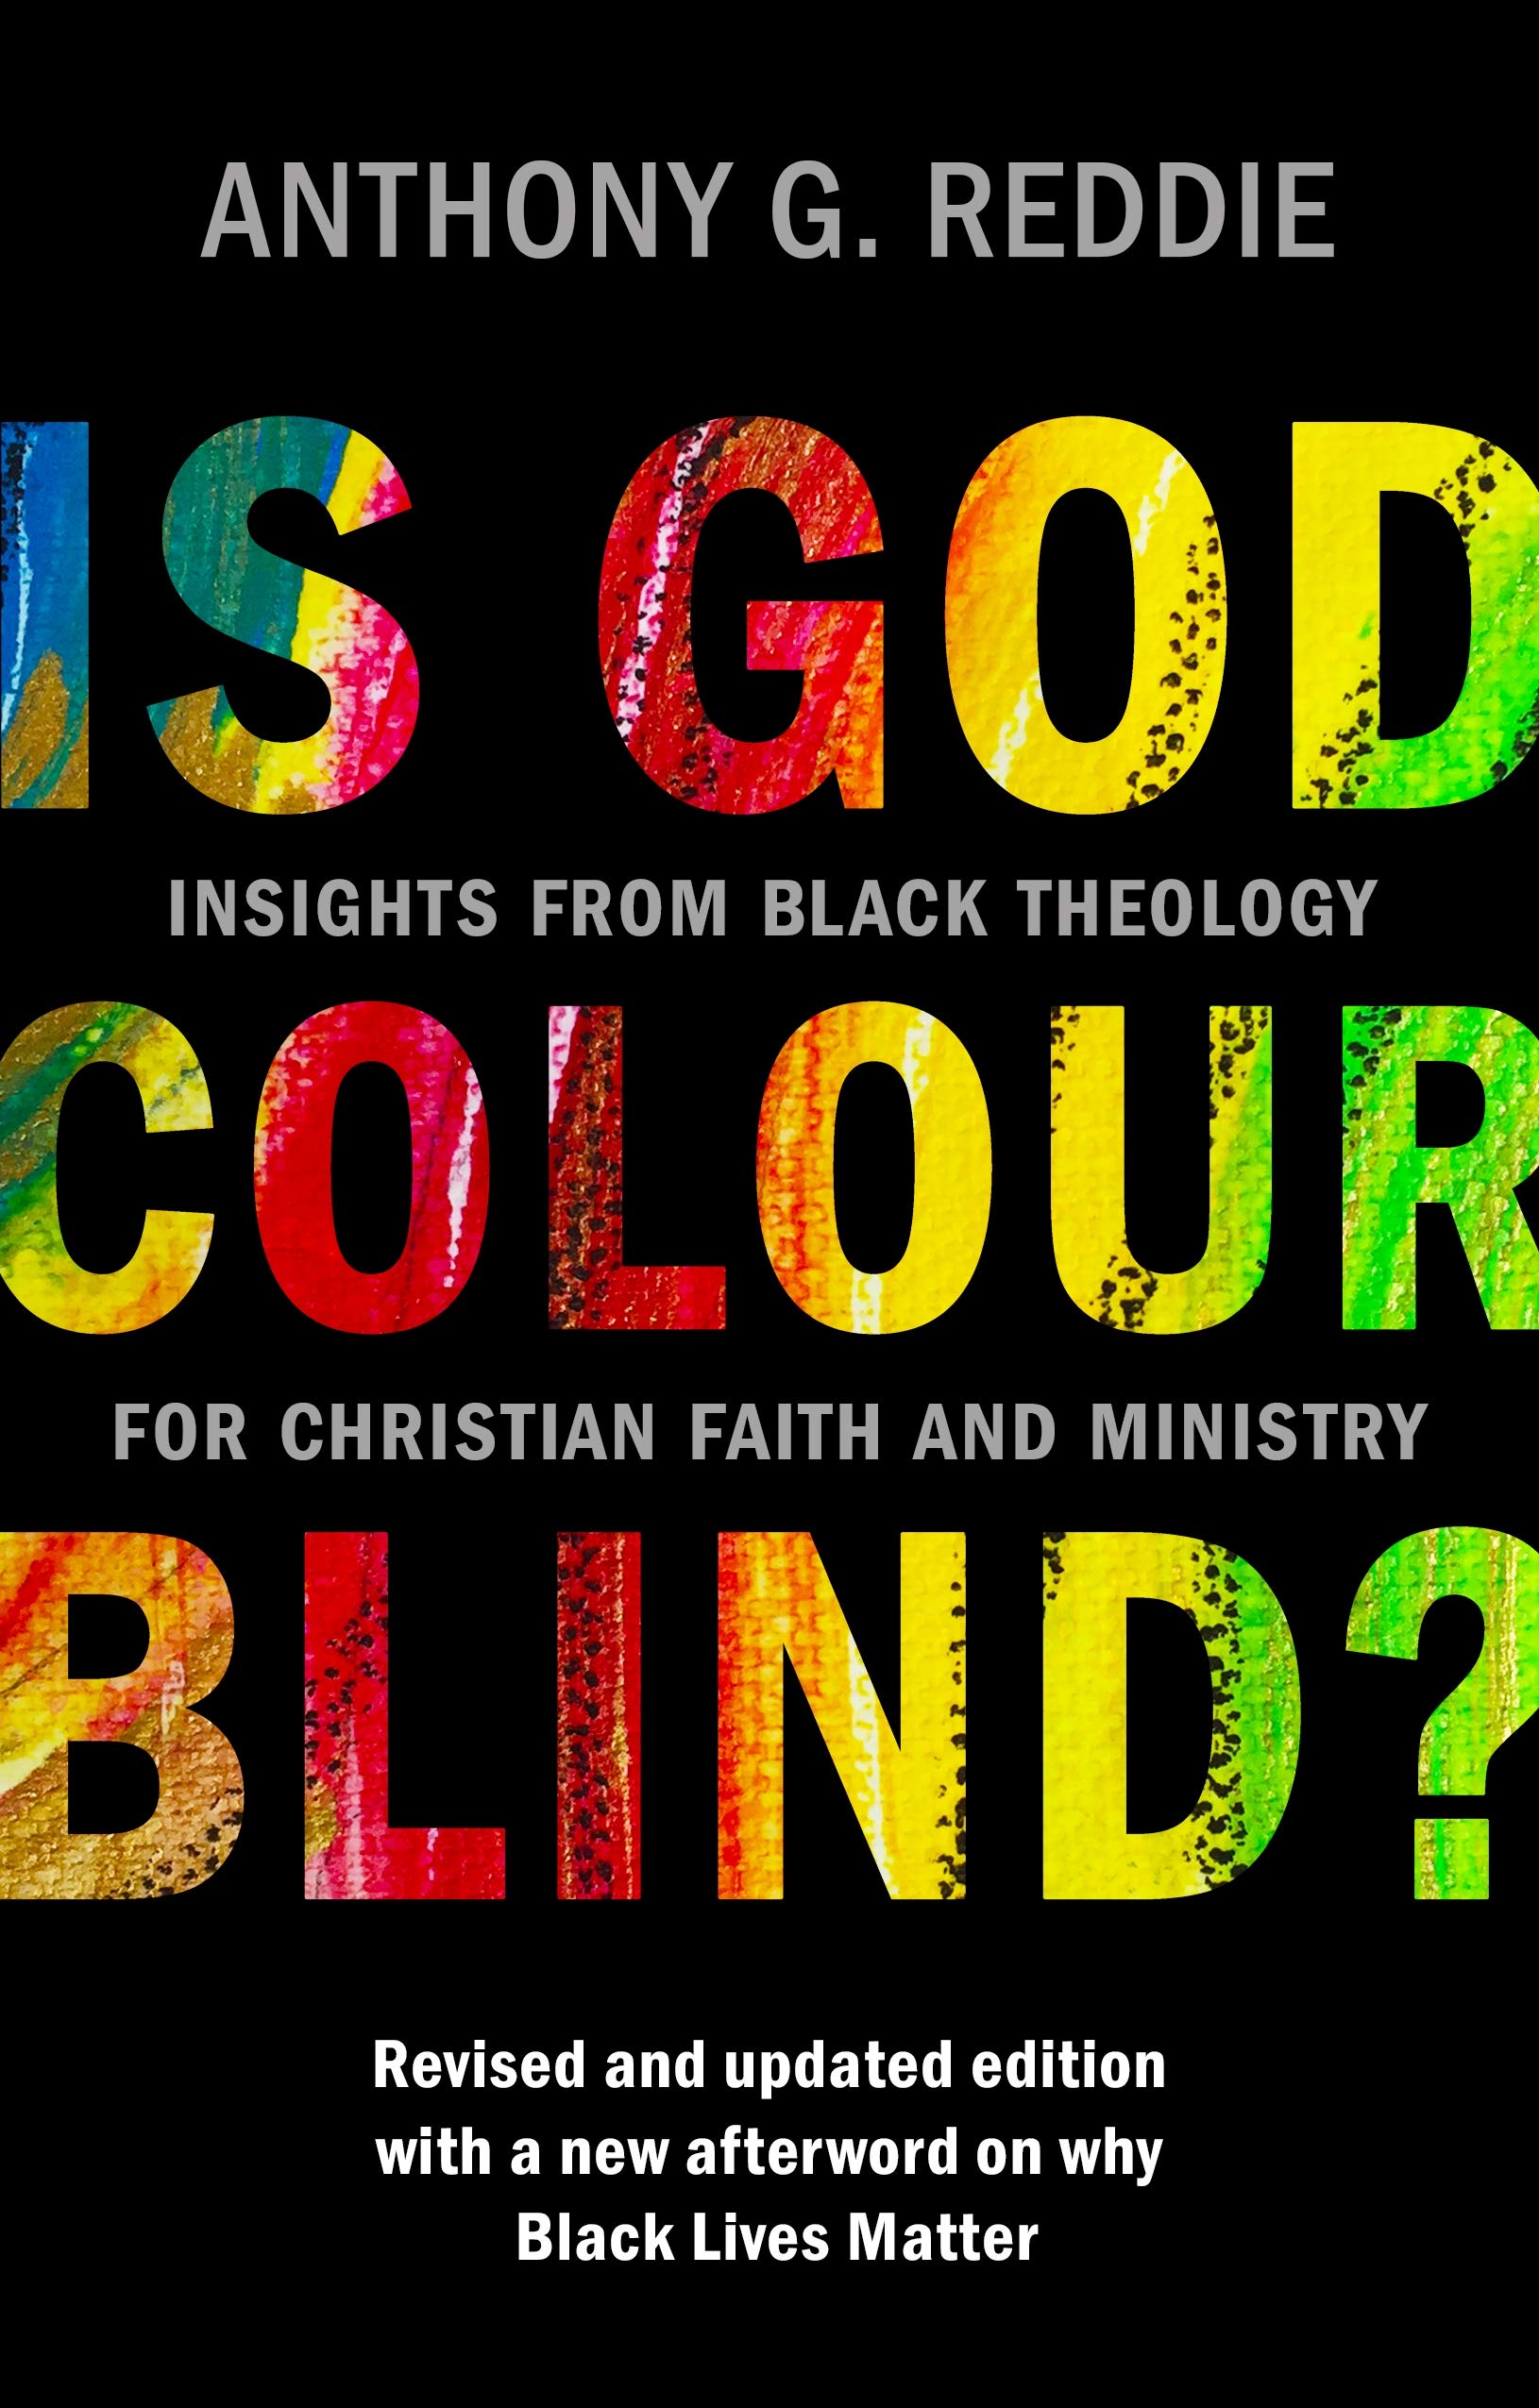 Is God Colour-Blind